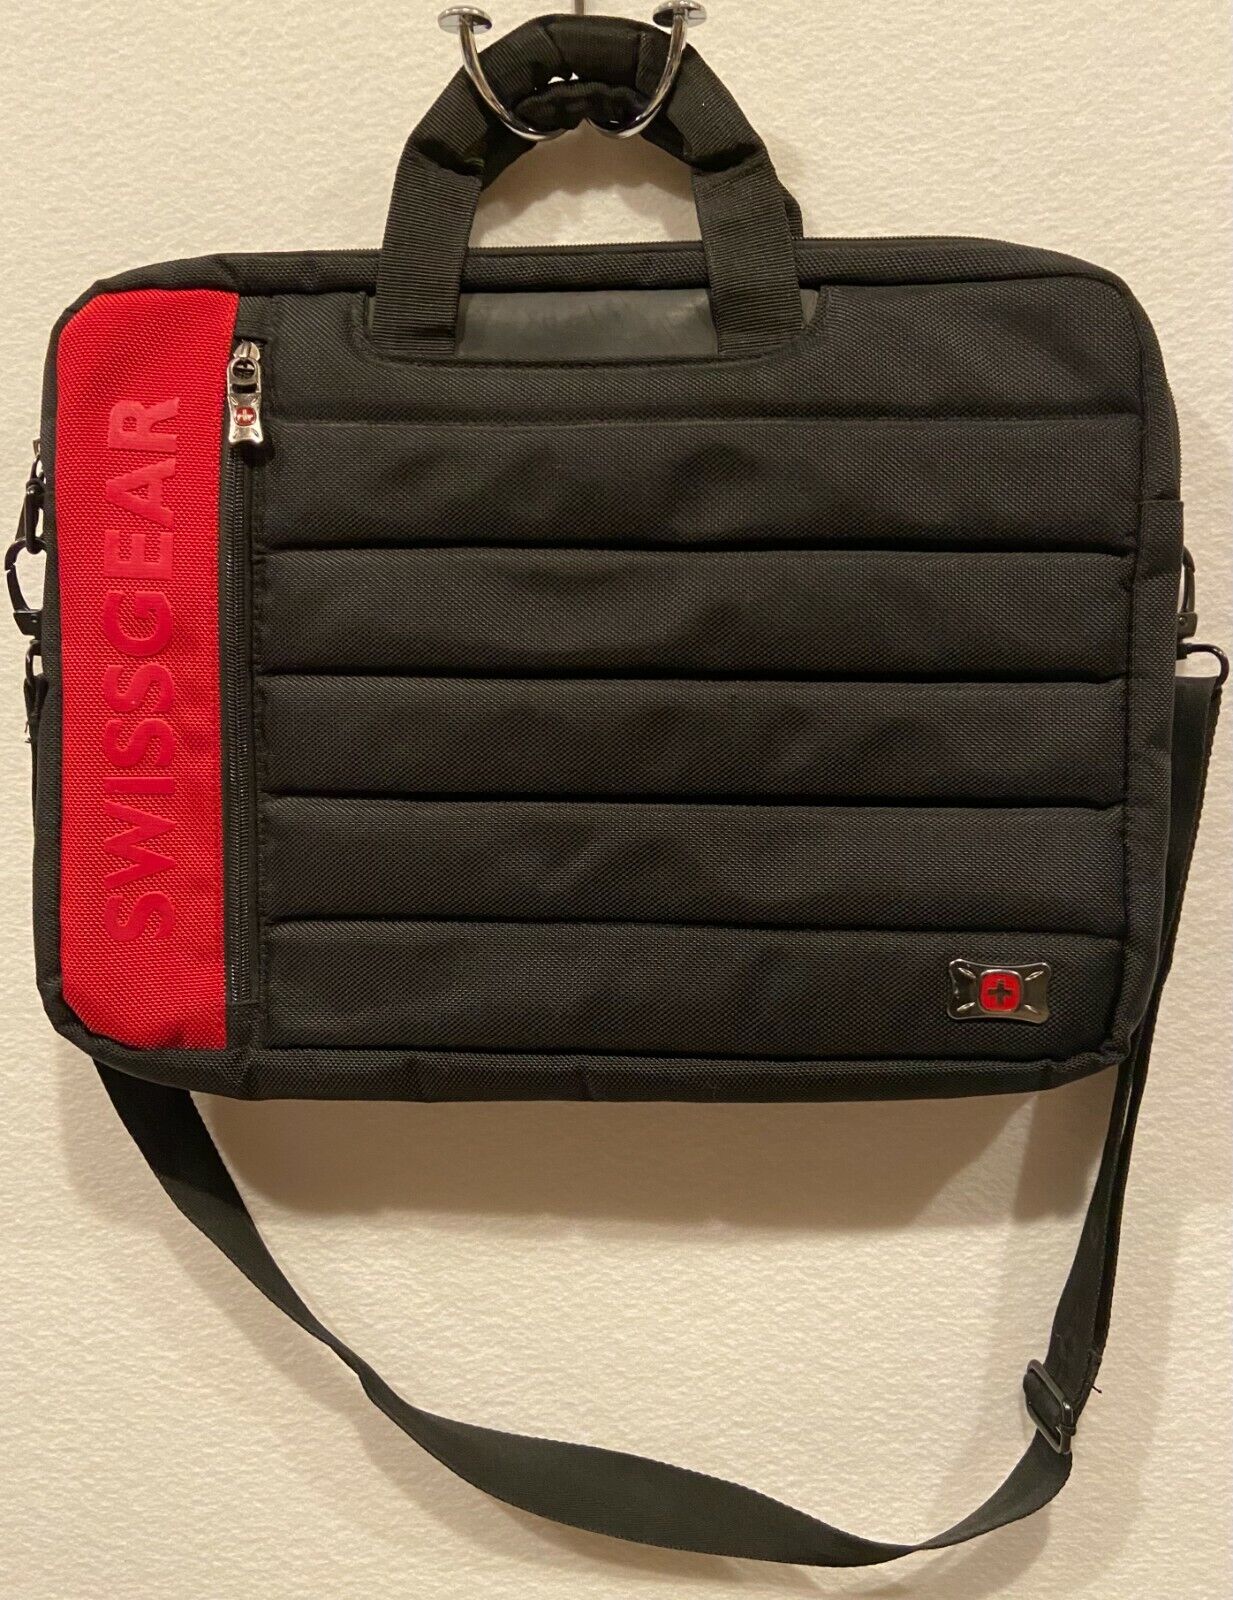 SwissGear Wenger Swiss Gear Anthem Laptop Bag w/ Shoulder Strap Black Red